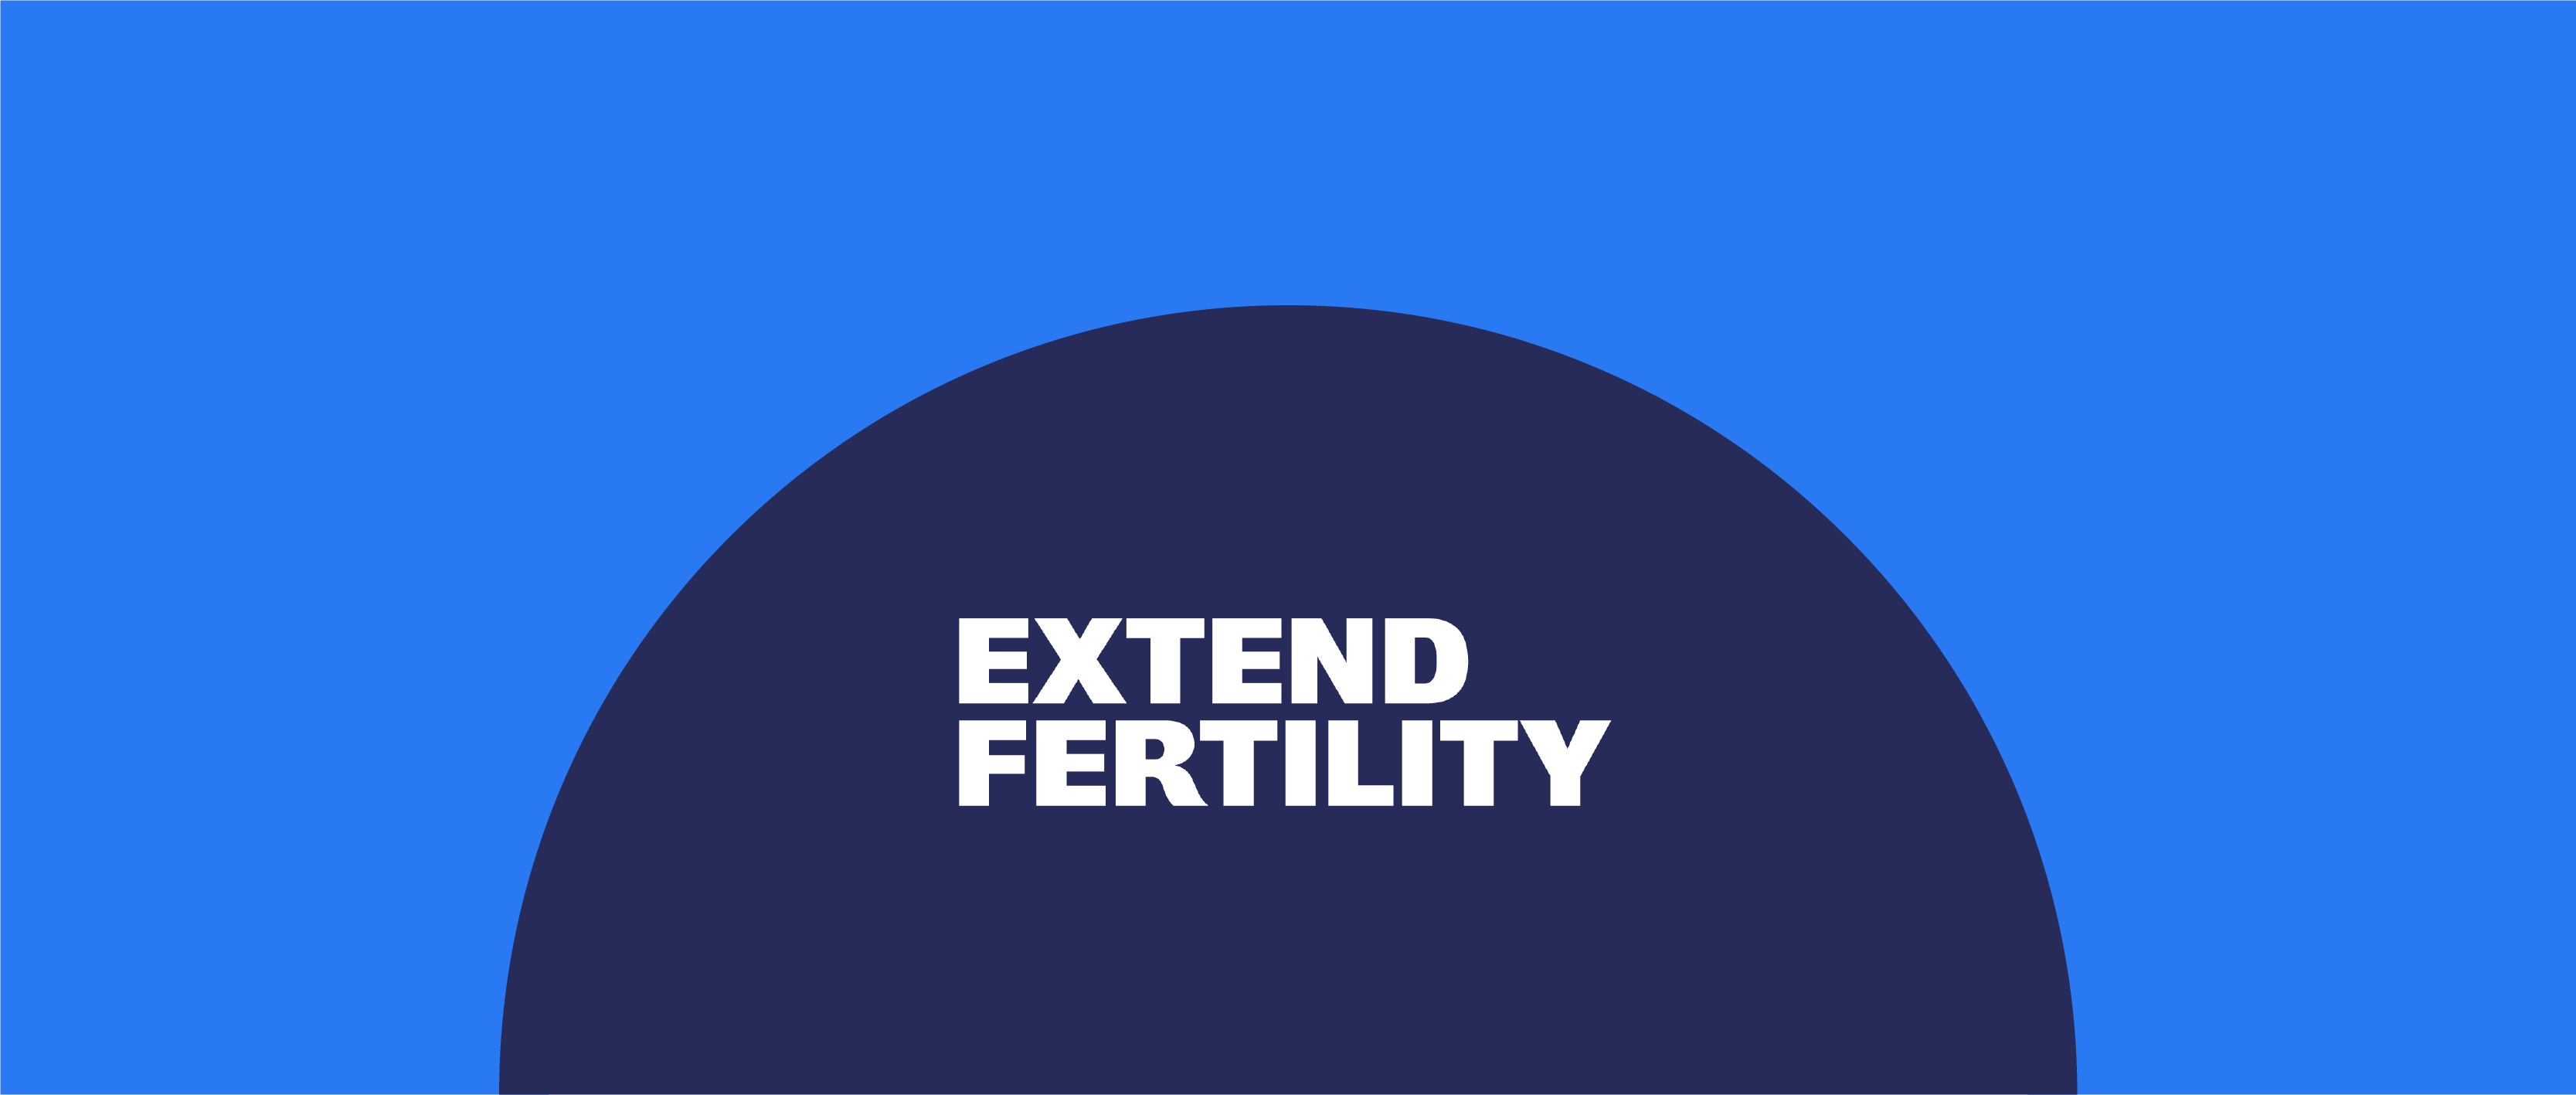 Extend-Fertility_Case Study_Header